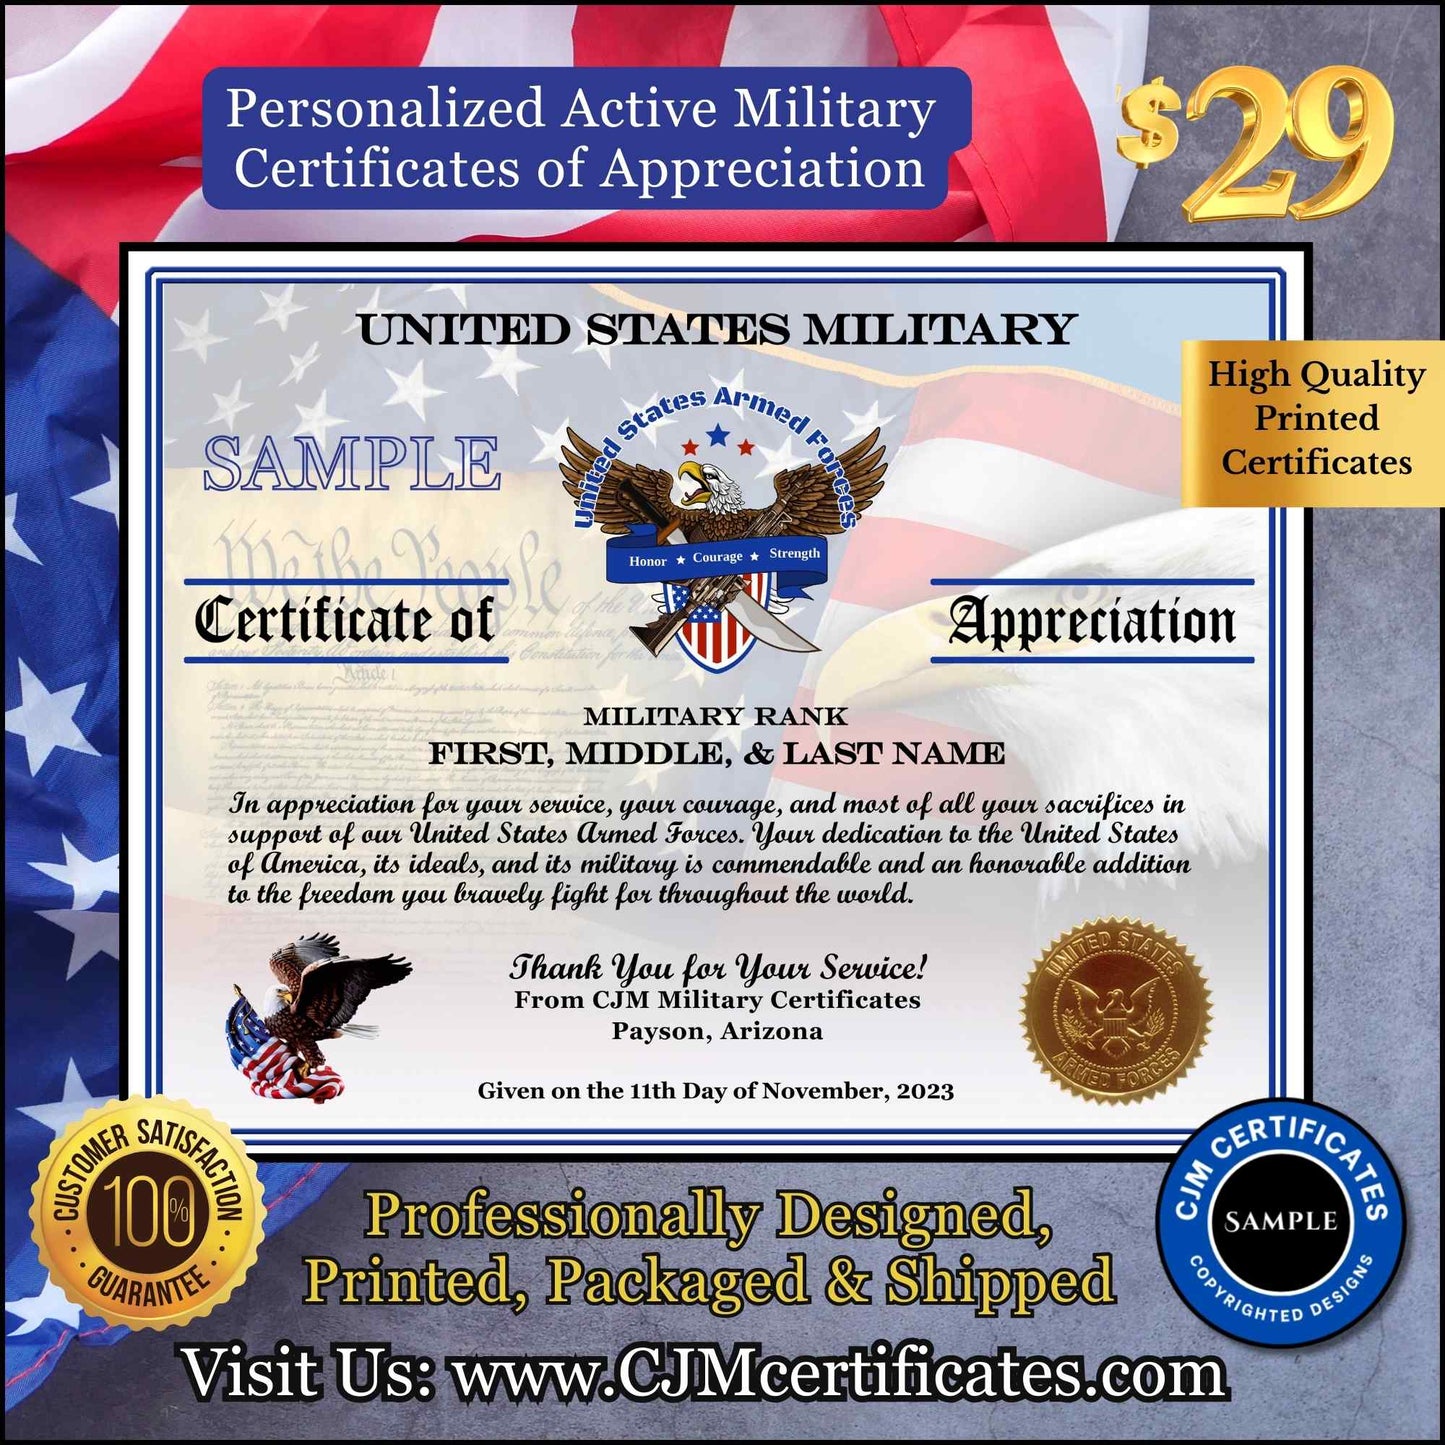 Active Military Certificates of Appreciation